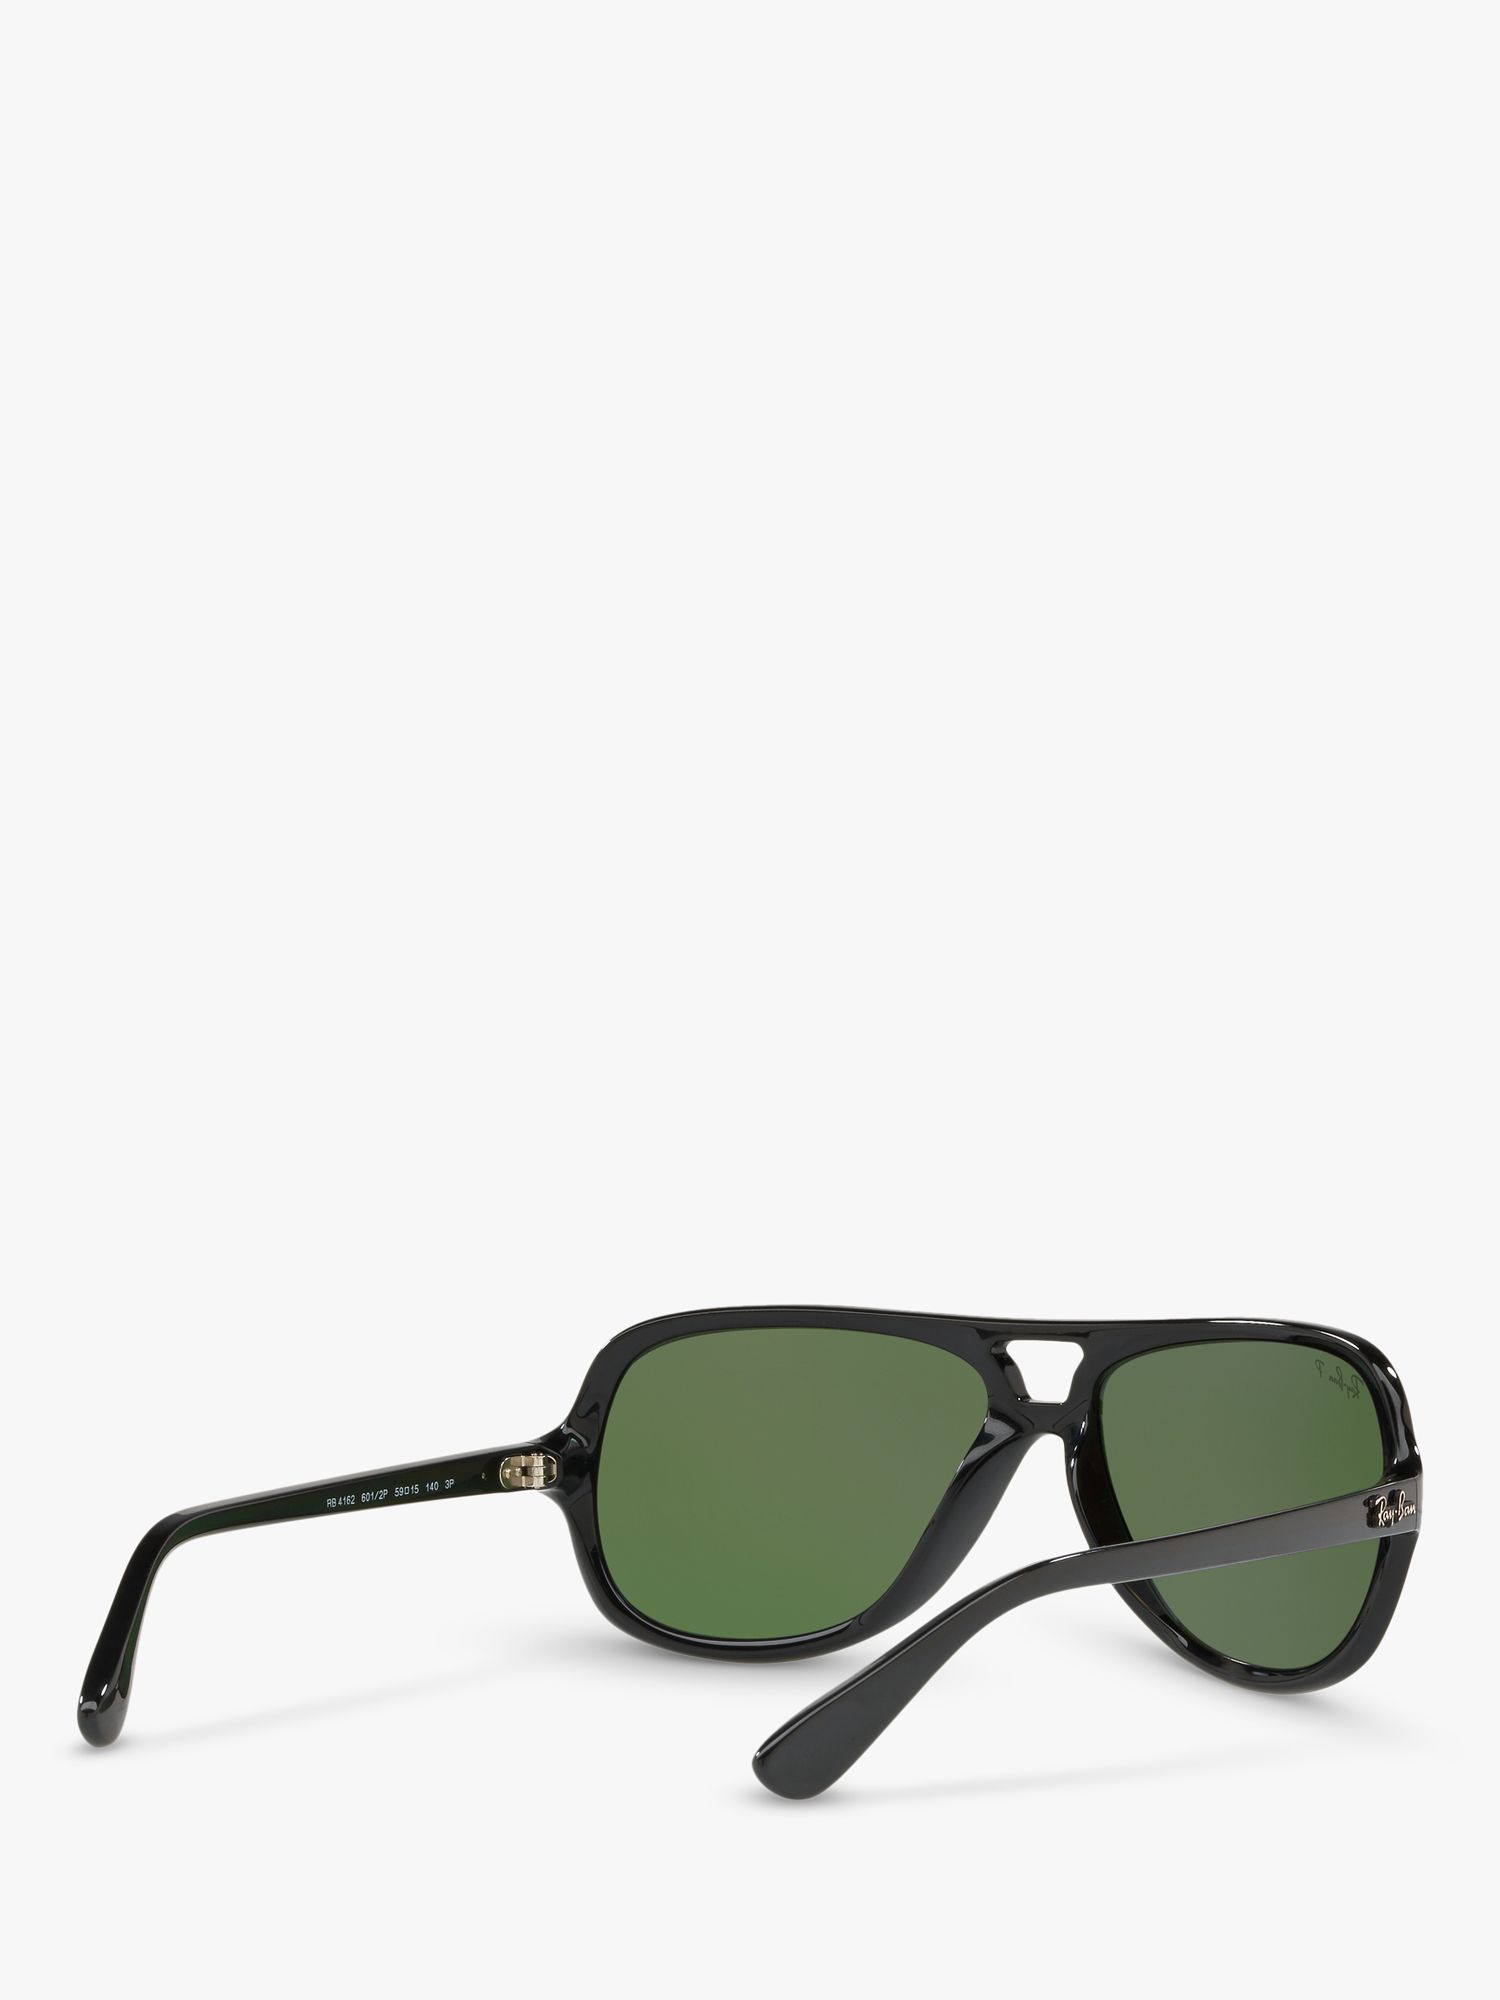 Buy Ray-Ban RB4162 Men's Polarised Aviator Sunglasses, Black/Green Online at johnlewis.com